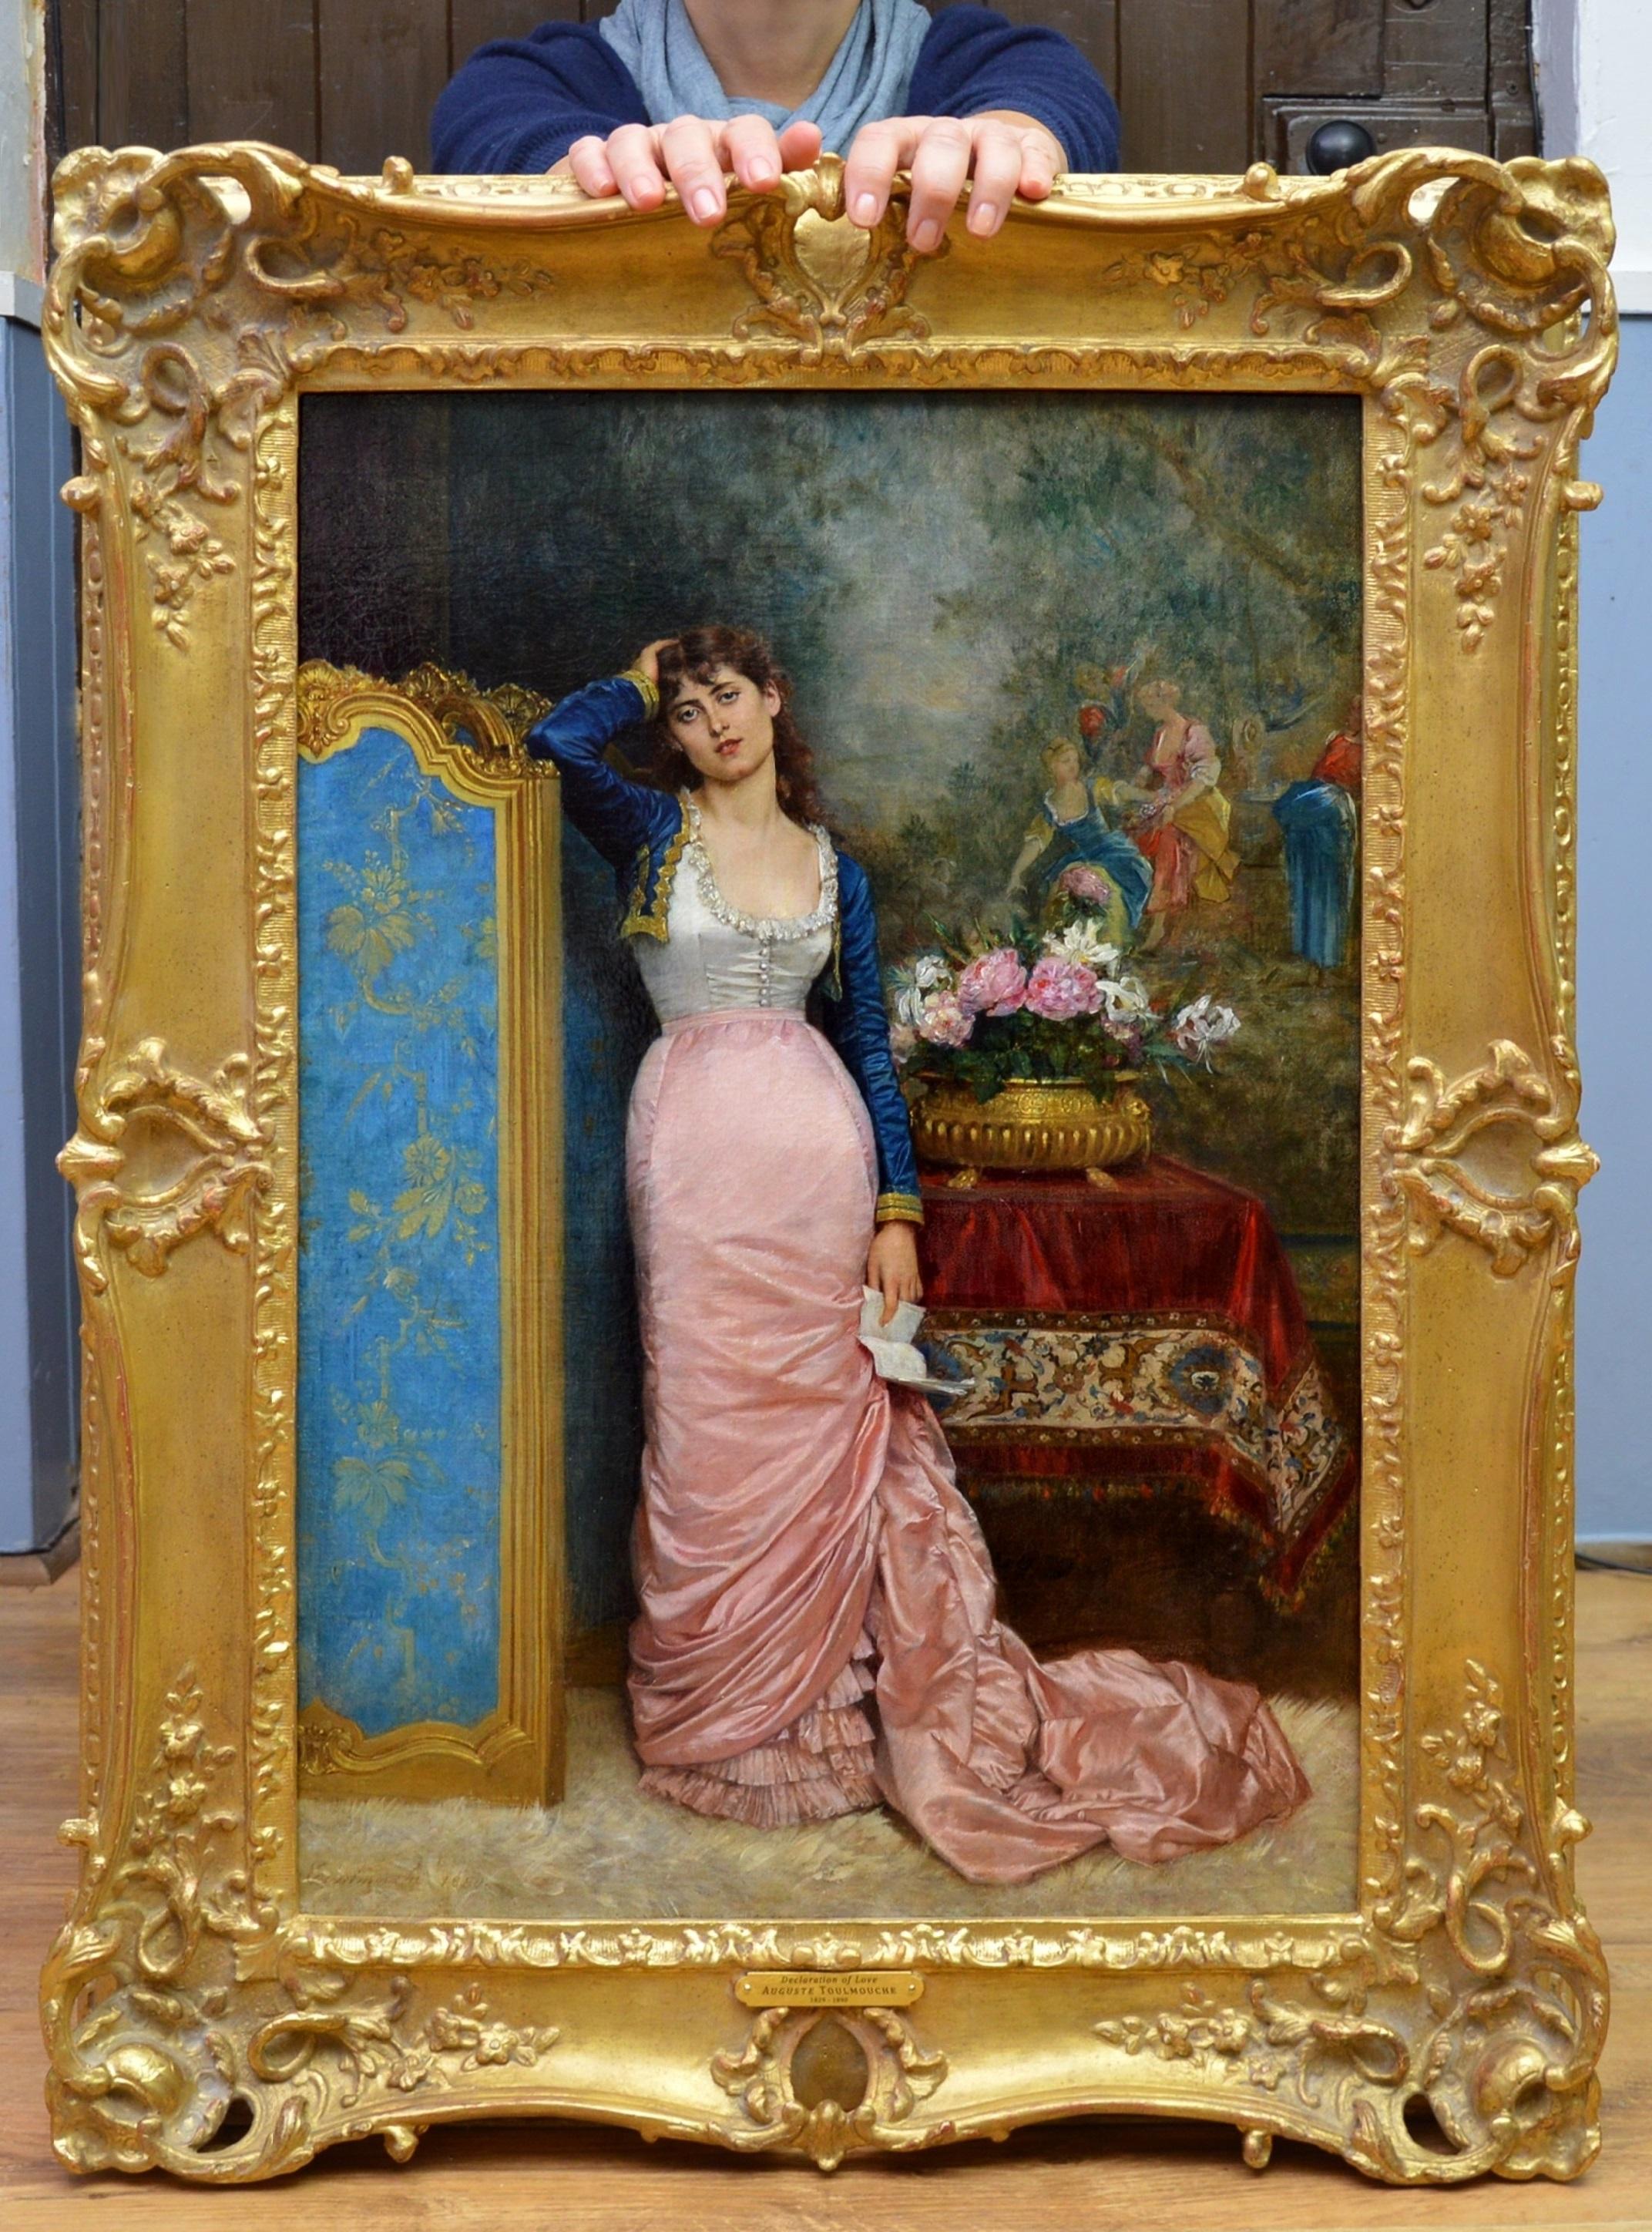 Declaration of Love - 19th Century French Belle Epoque Portrait Oil Painting - Brown Portrait Painting by Auguste Toulmouche